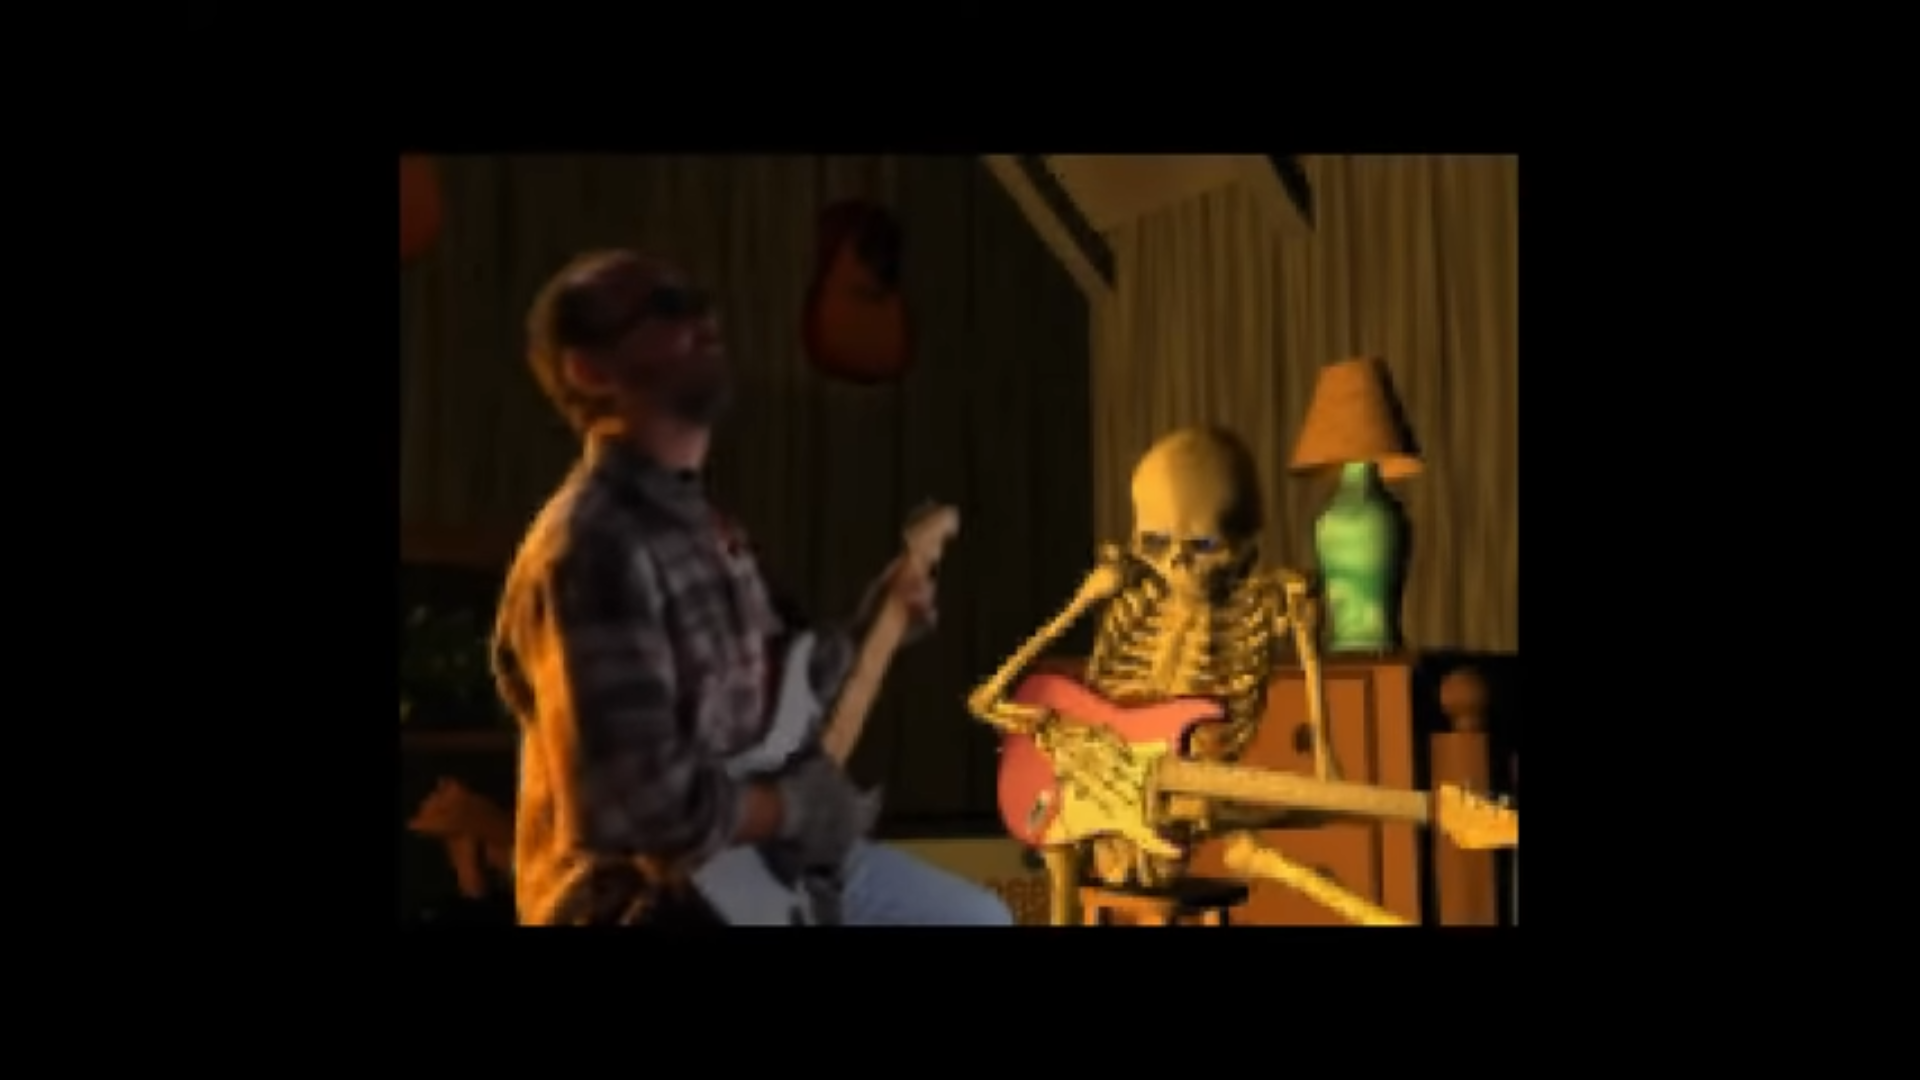 Mr. Bones and the Blind Man